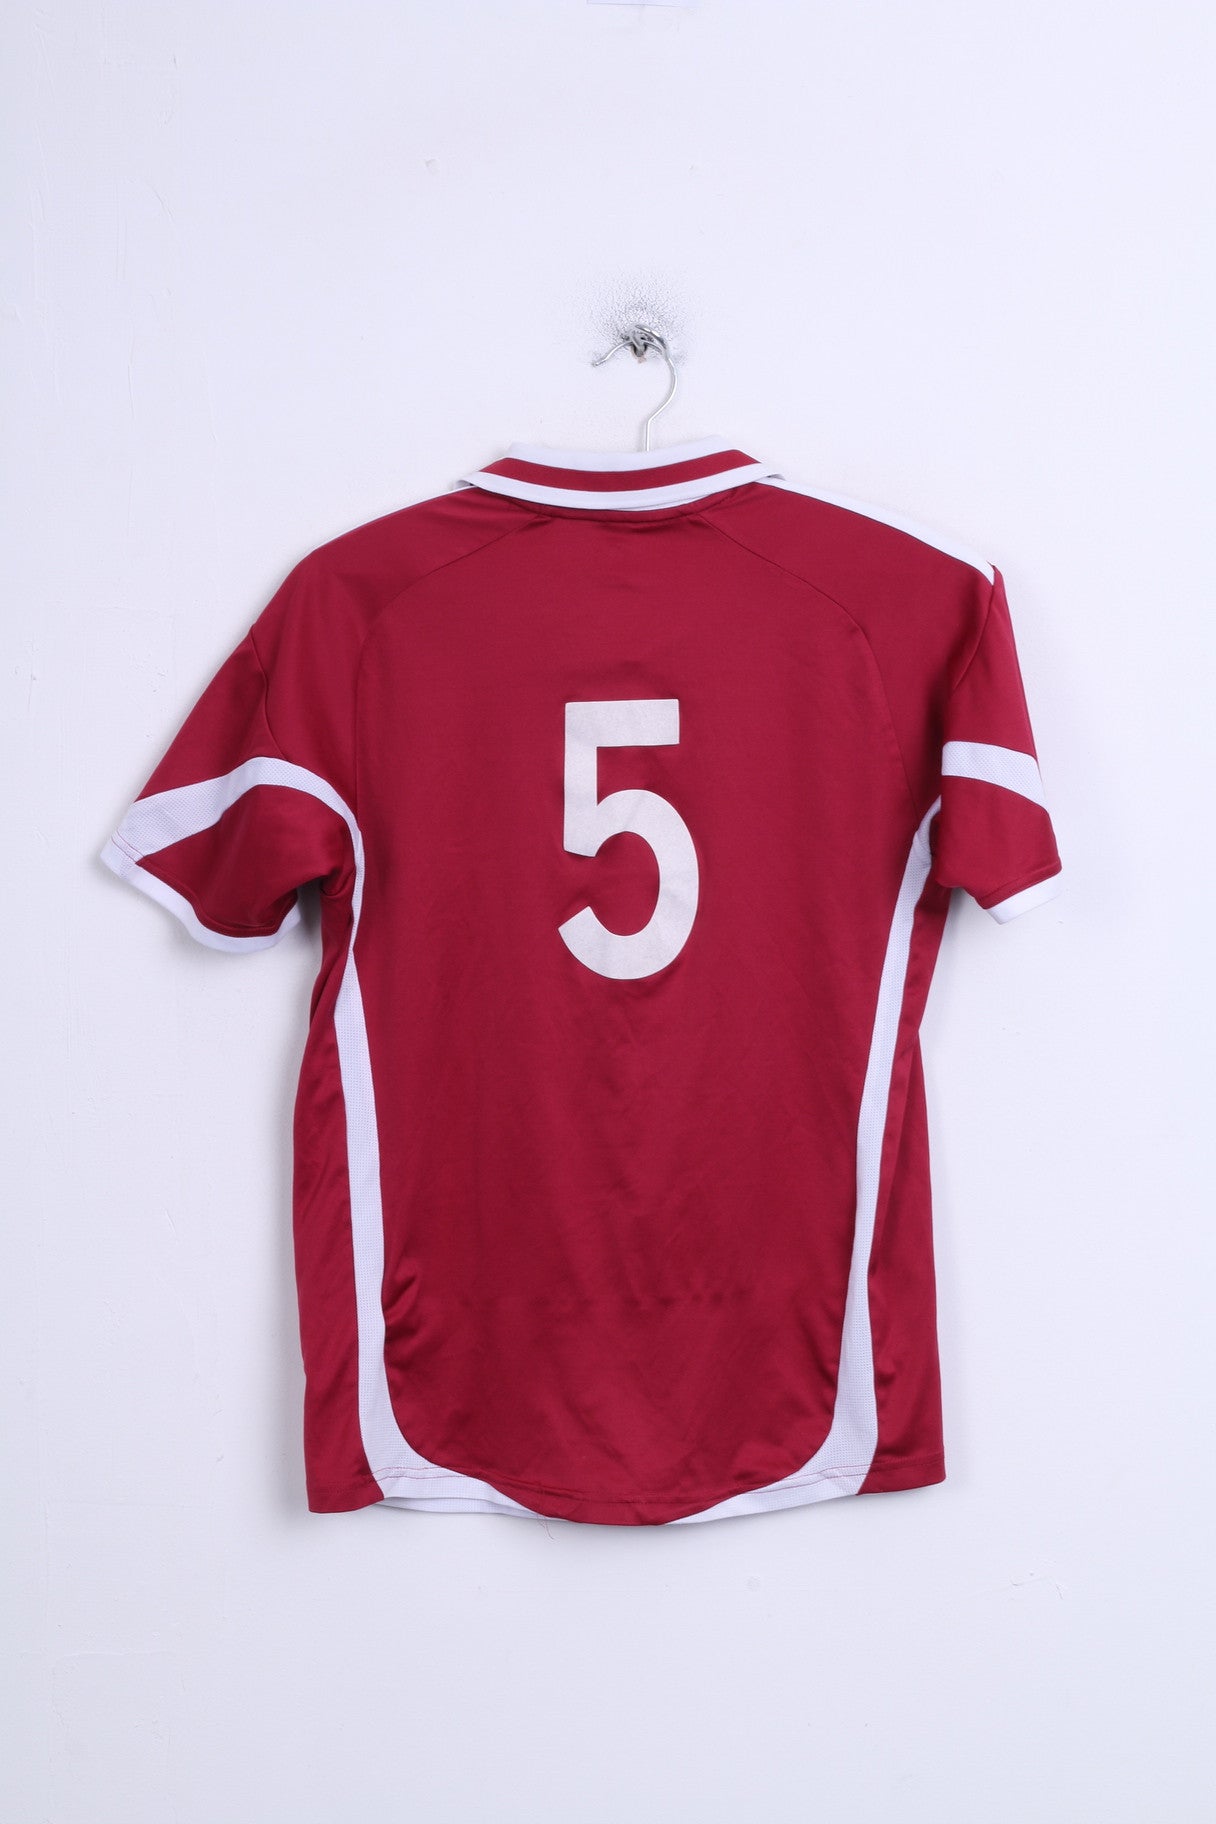 Adidas Nürnberg Boys 13-14Y Polo Shirt Maroon Football Club - RetrospectClothes